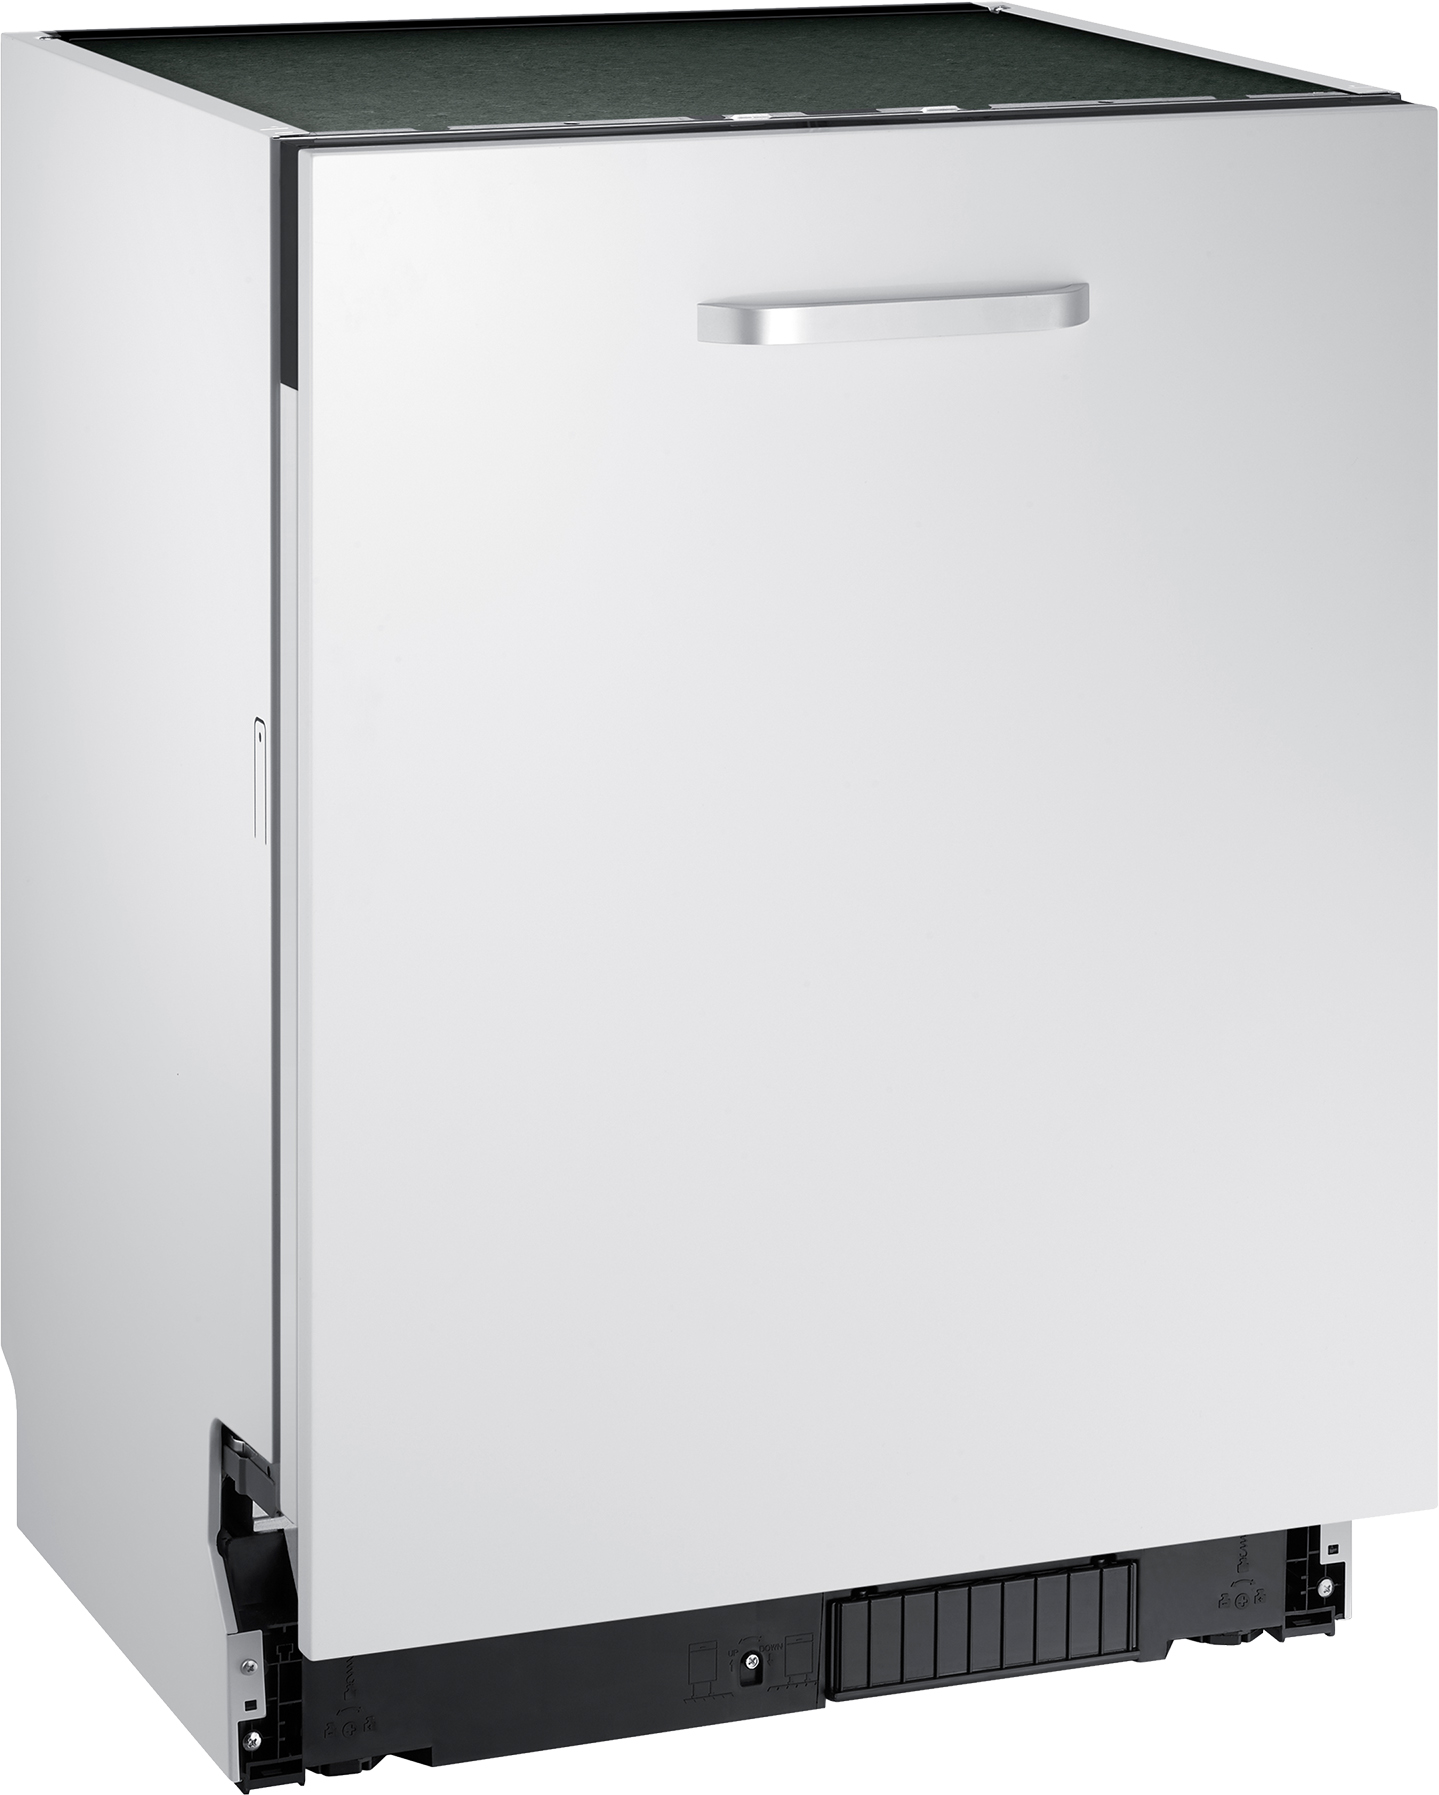 Посудомоечная машина Samsung DW60M5050BB/WT цена 17799.00 грн - фотография 2